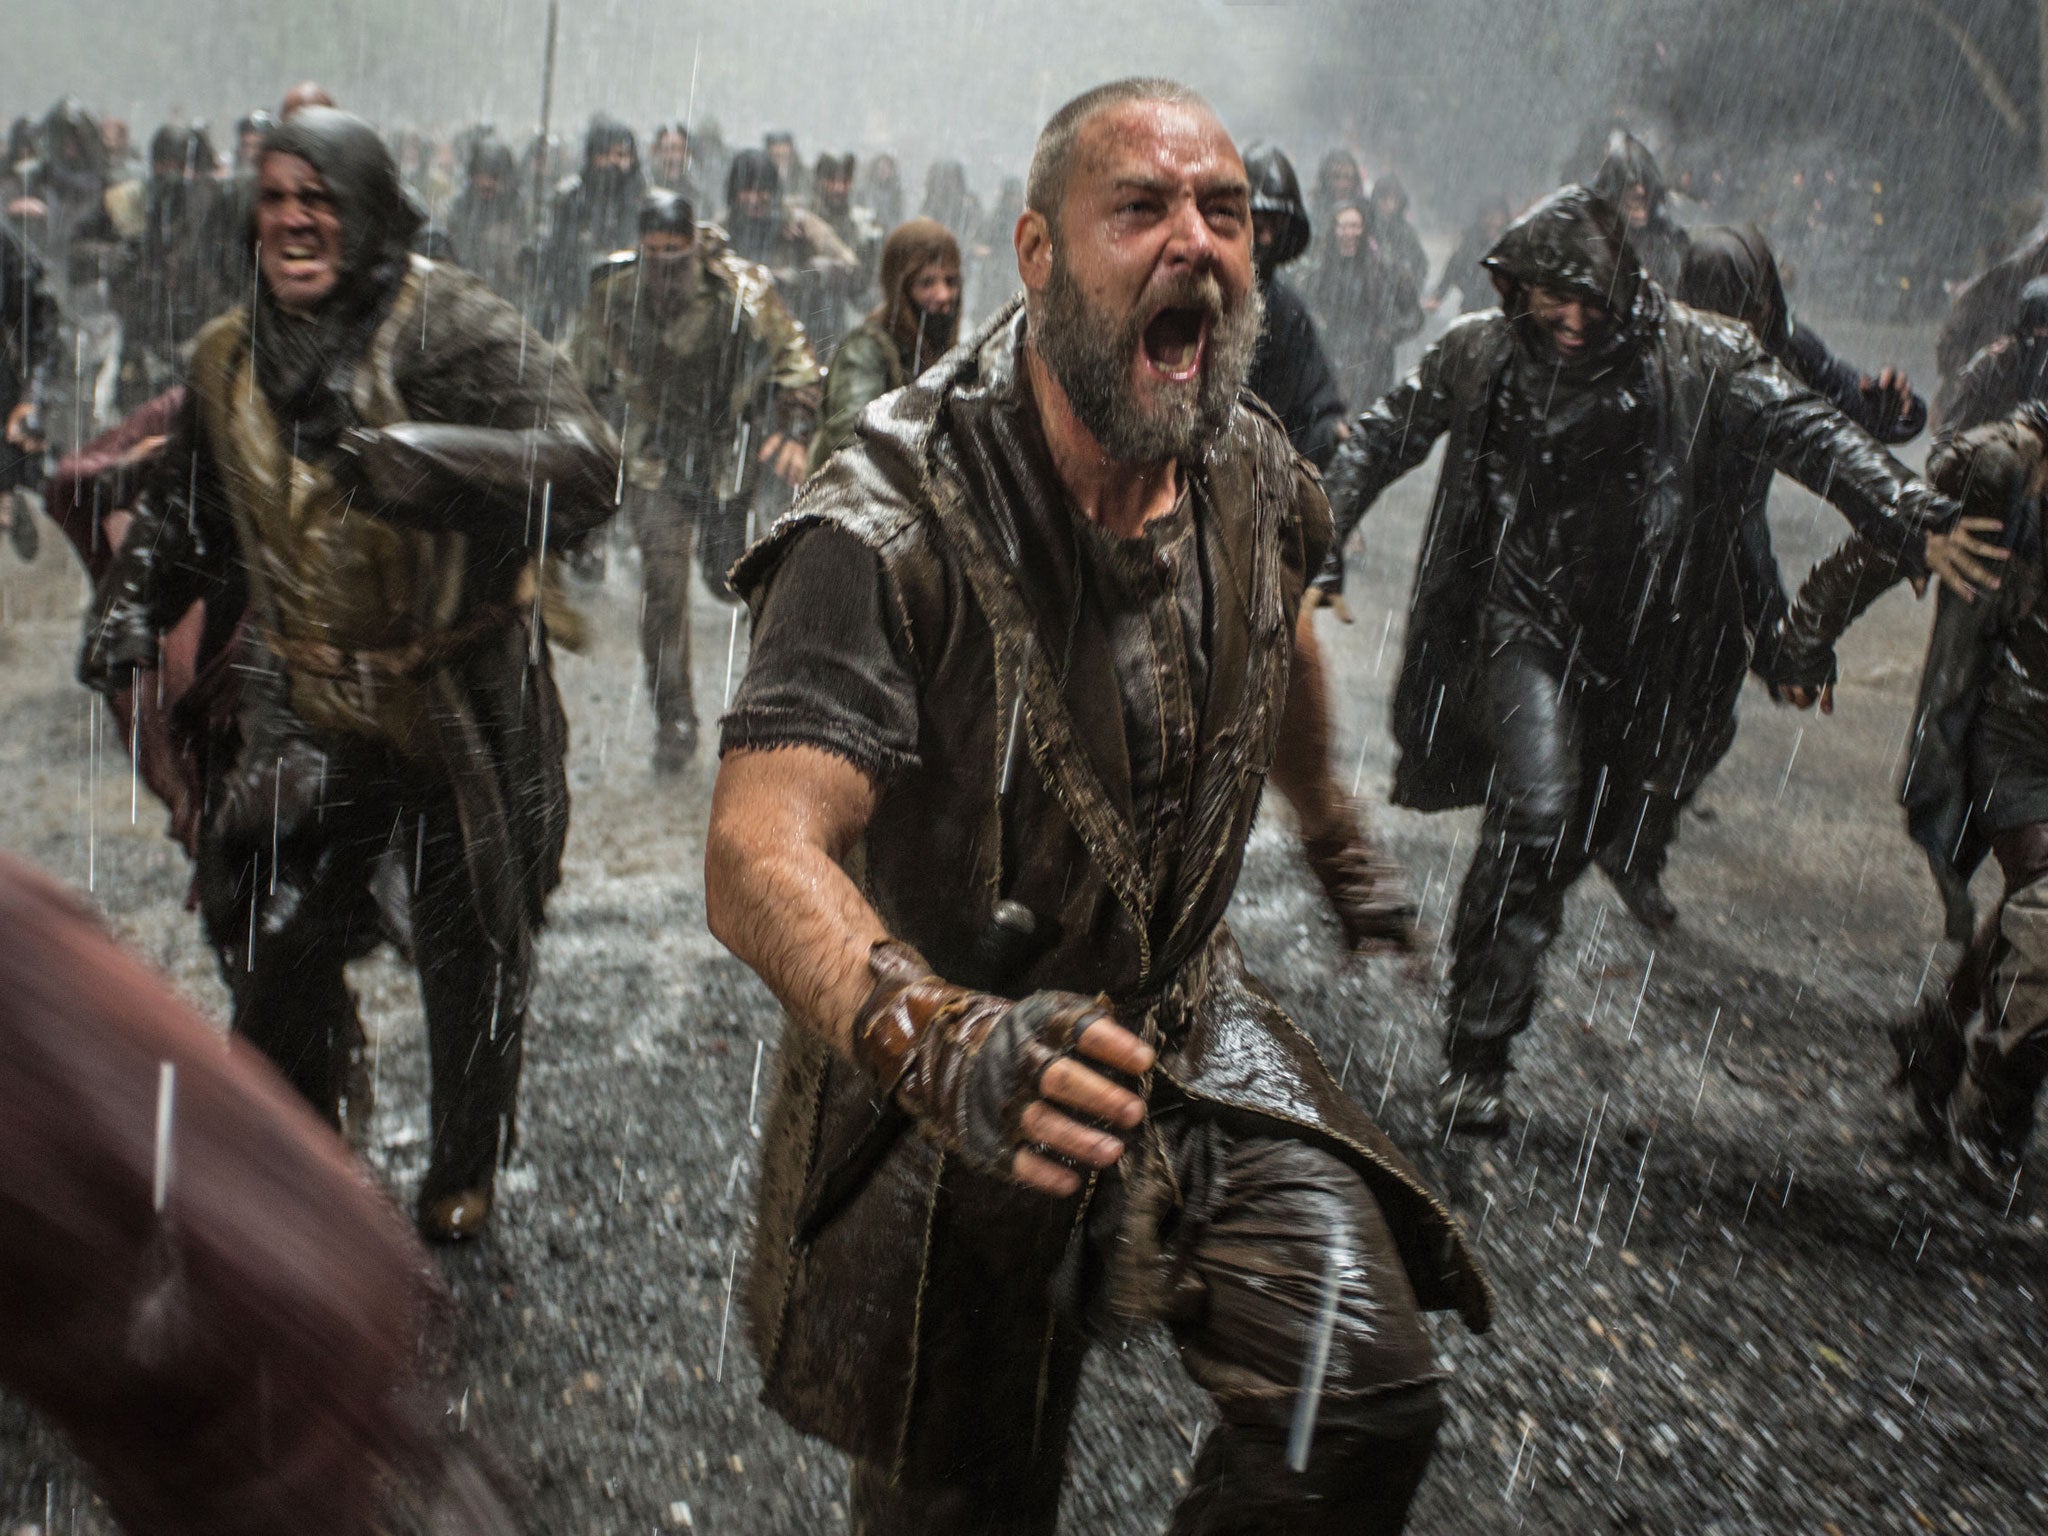 Russell Crowe in a dramatic storm scene in Darren Aronofsky's Noah